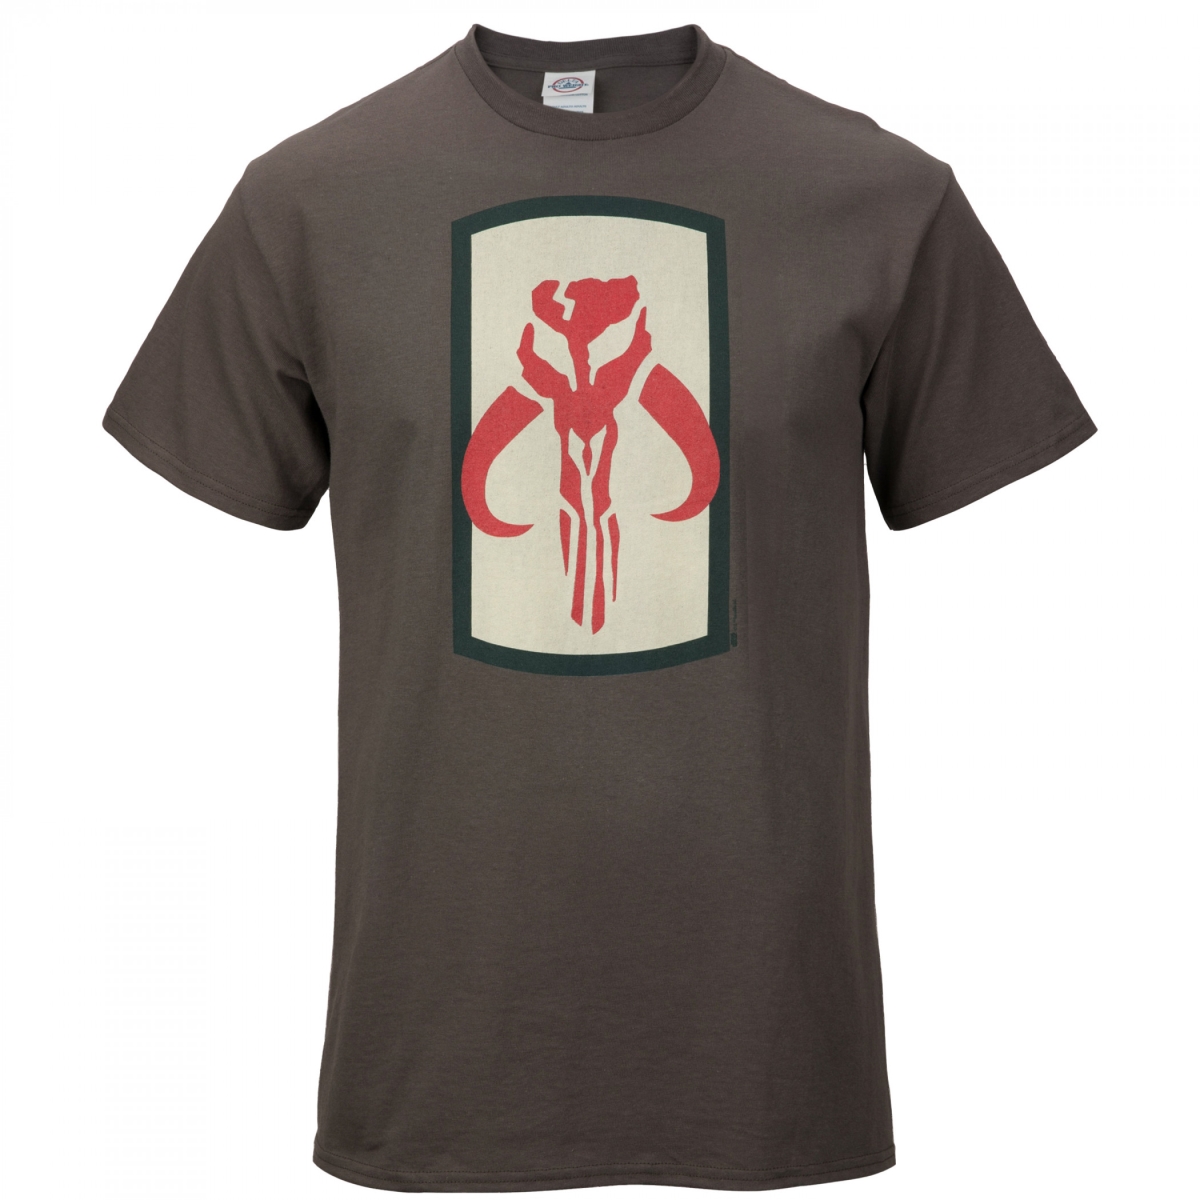 Picture of Star Wars 872643-4xlarge Star Wars Mandalorian Mythosaur Skull Logo T-Shirt - 4XL